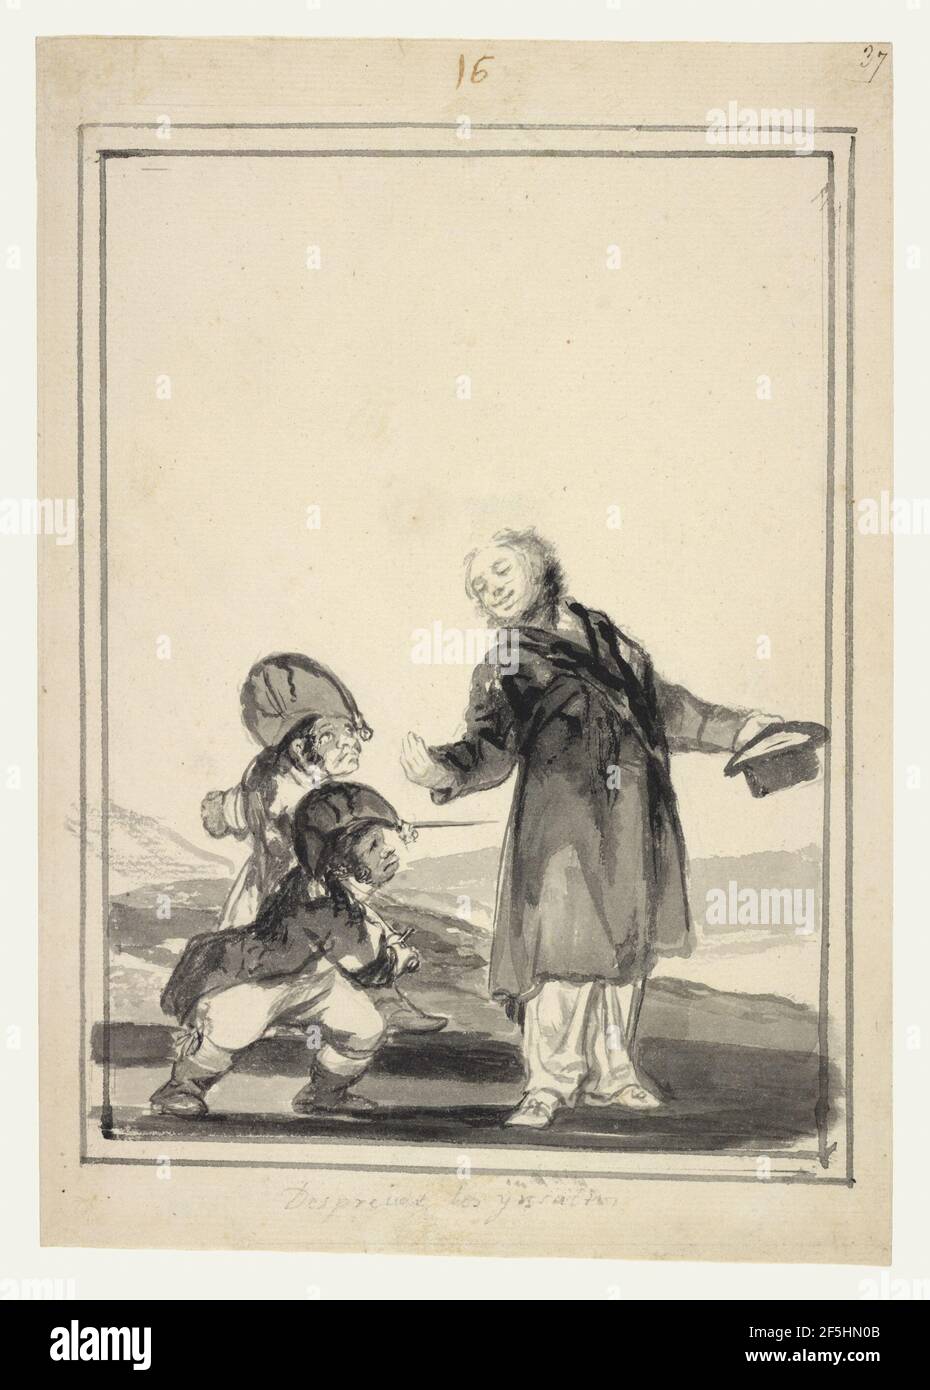 Contemptuous of the Insults. Francisco José de Goya y Lucientes (Francisco de Goya) (Spanish, 1746 - 1828) Stock Photo